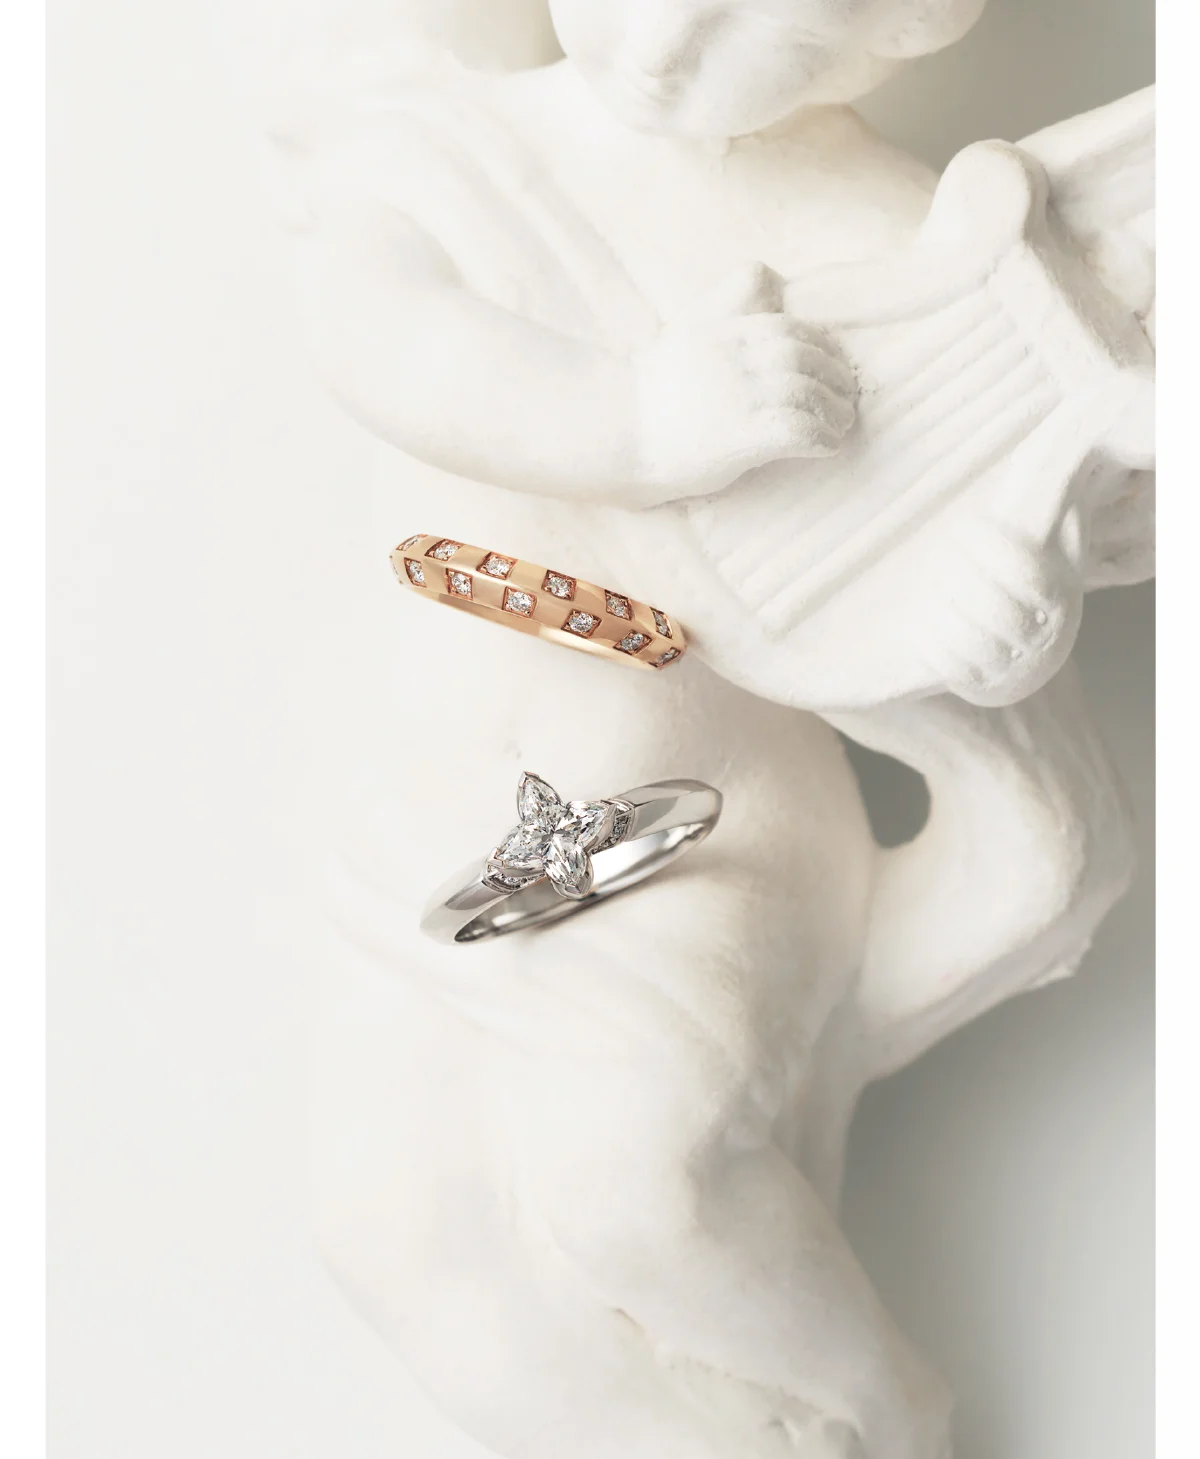 Louis Vuitton（ルイ・ヴィトン）の結婚指輪・婚約指輪